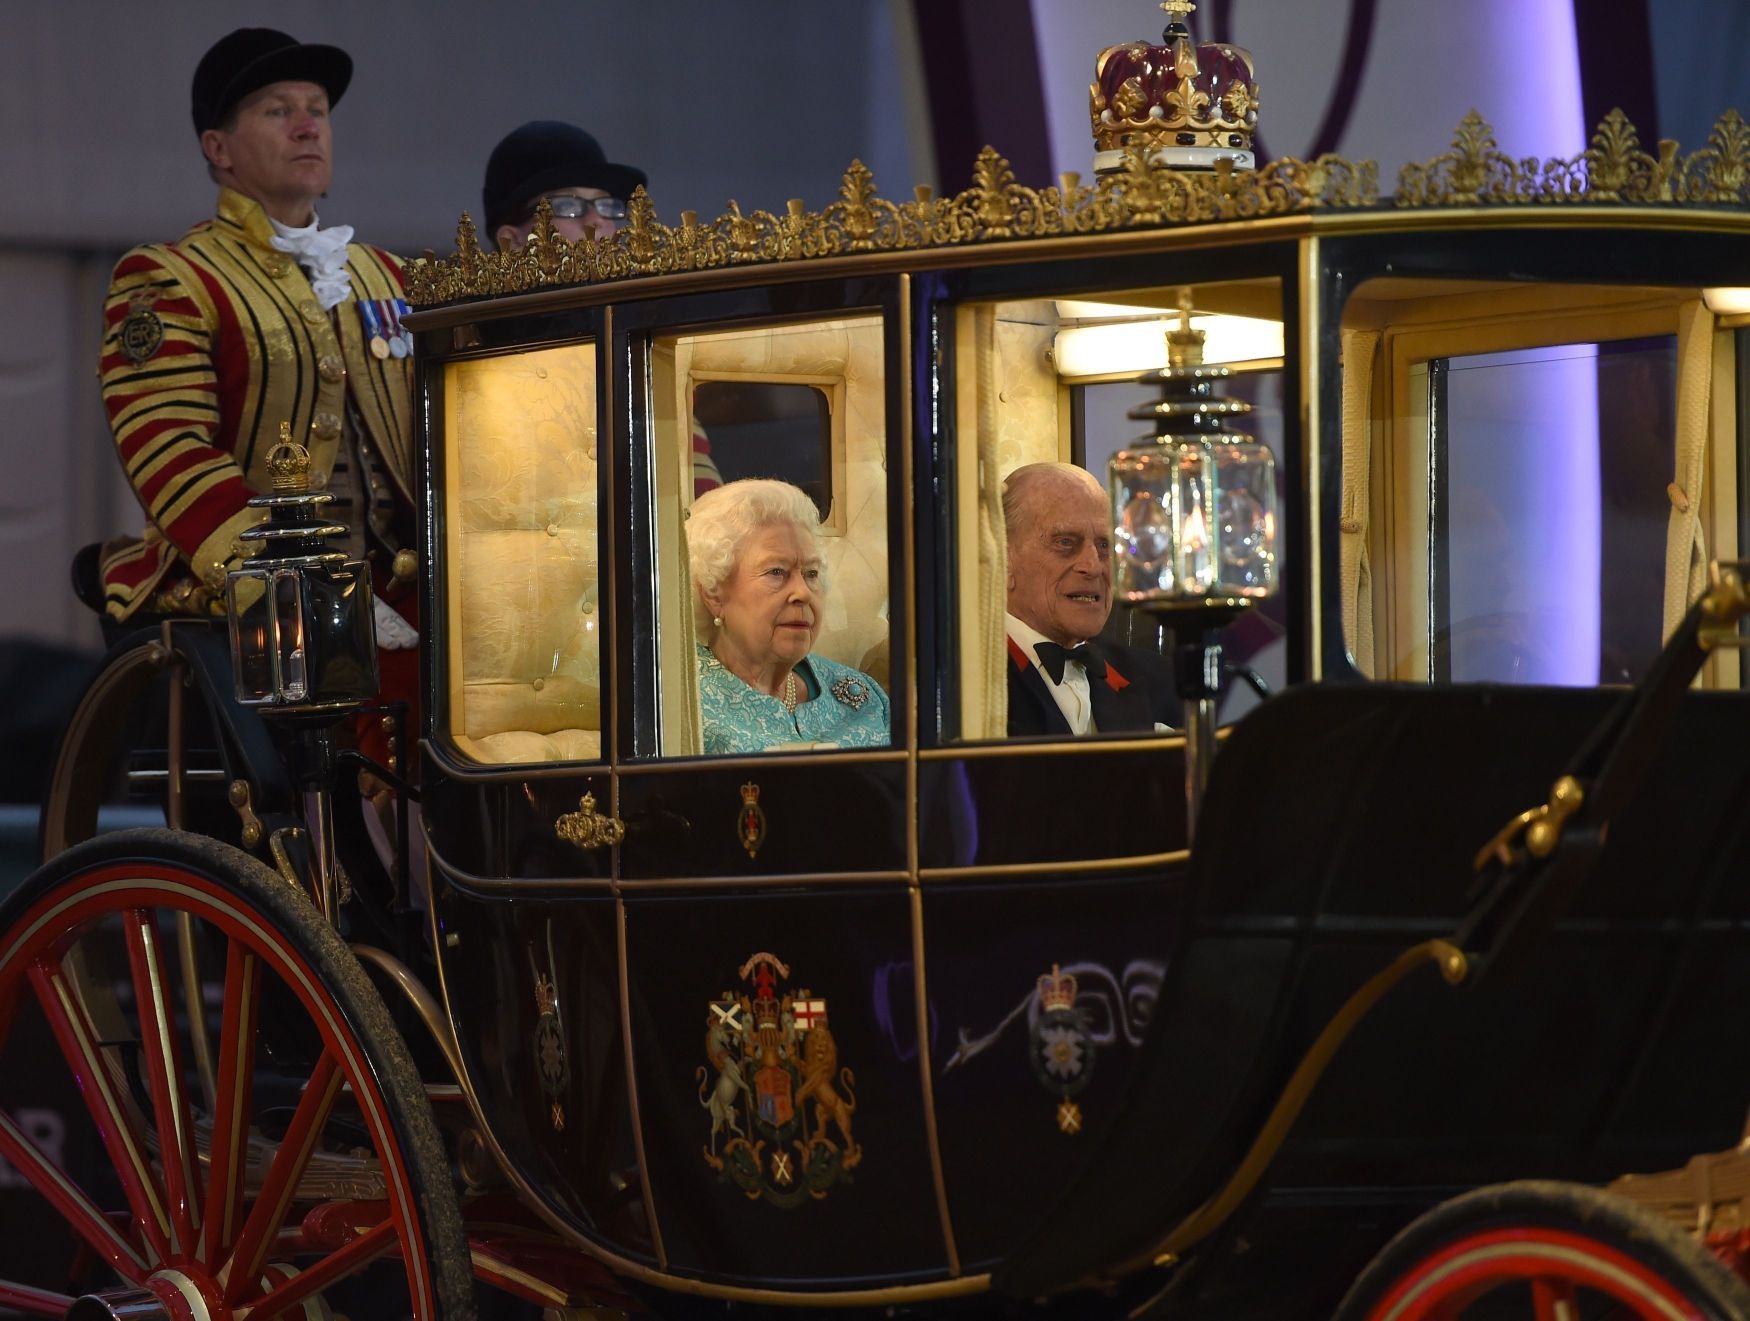 Královna Alžběta II. a princ Philip